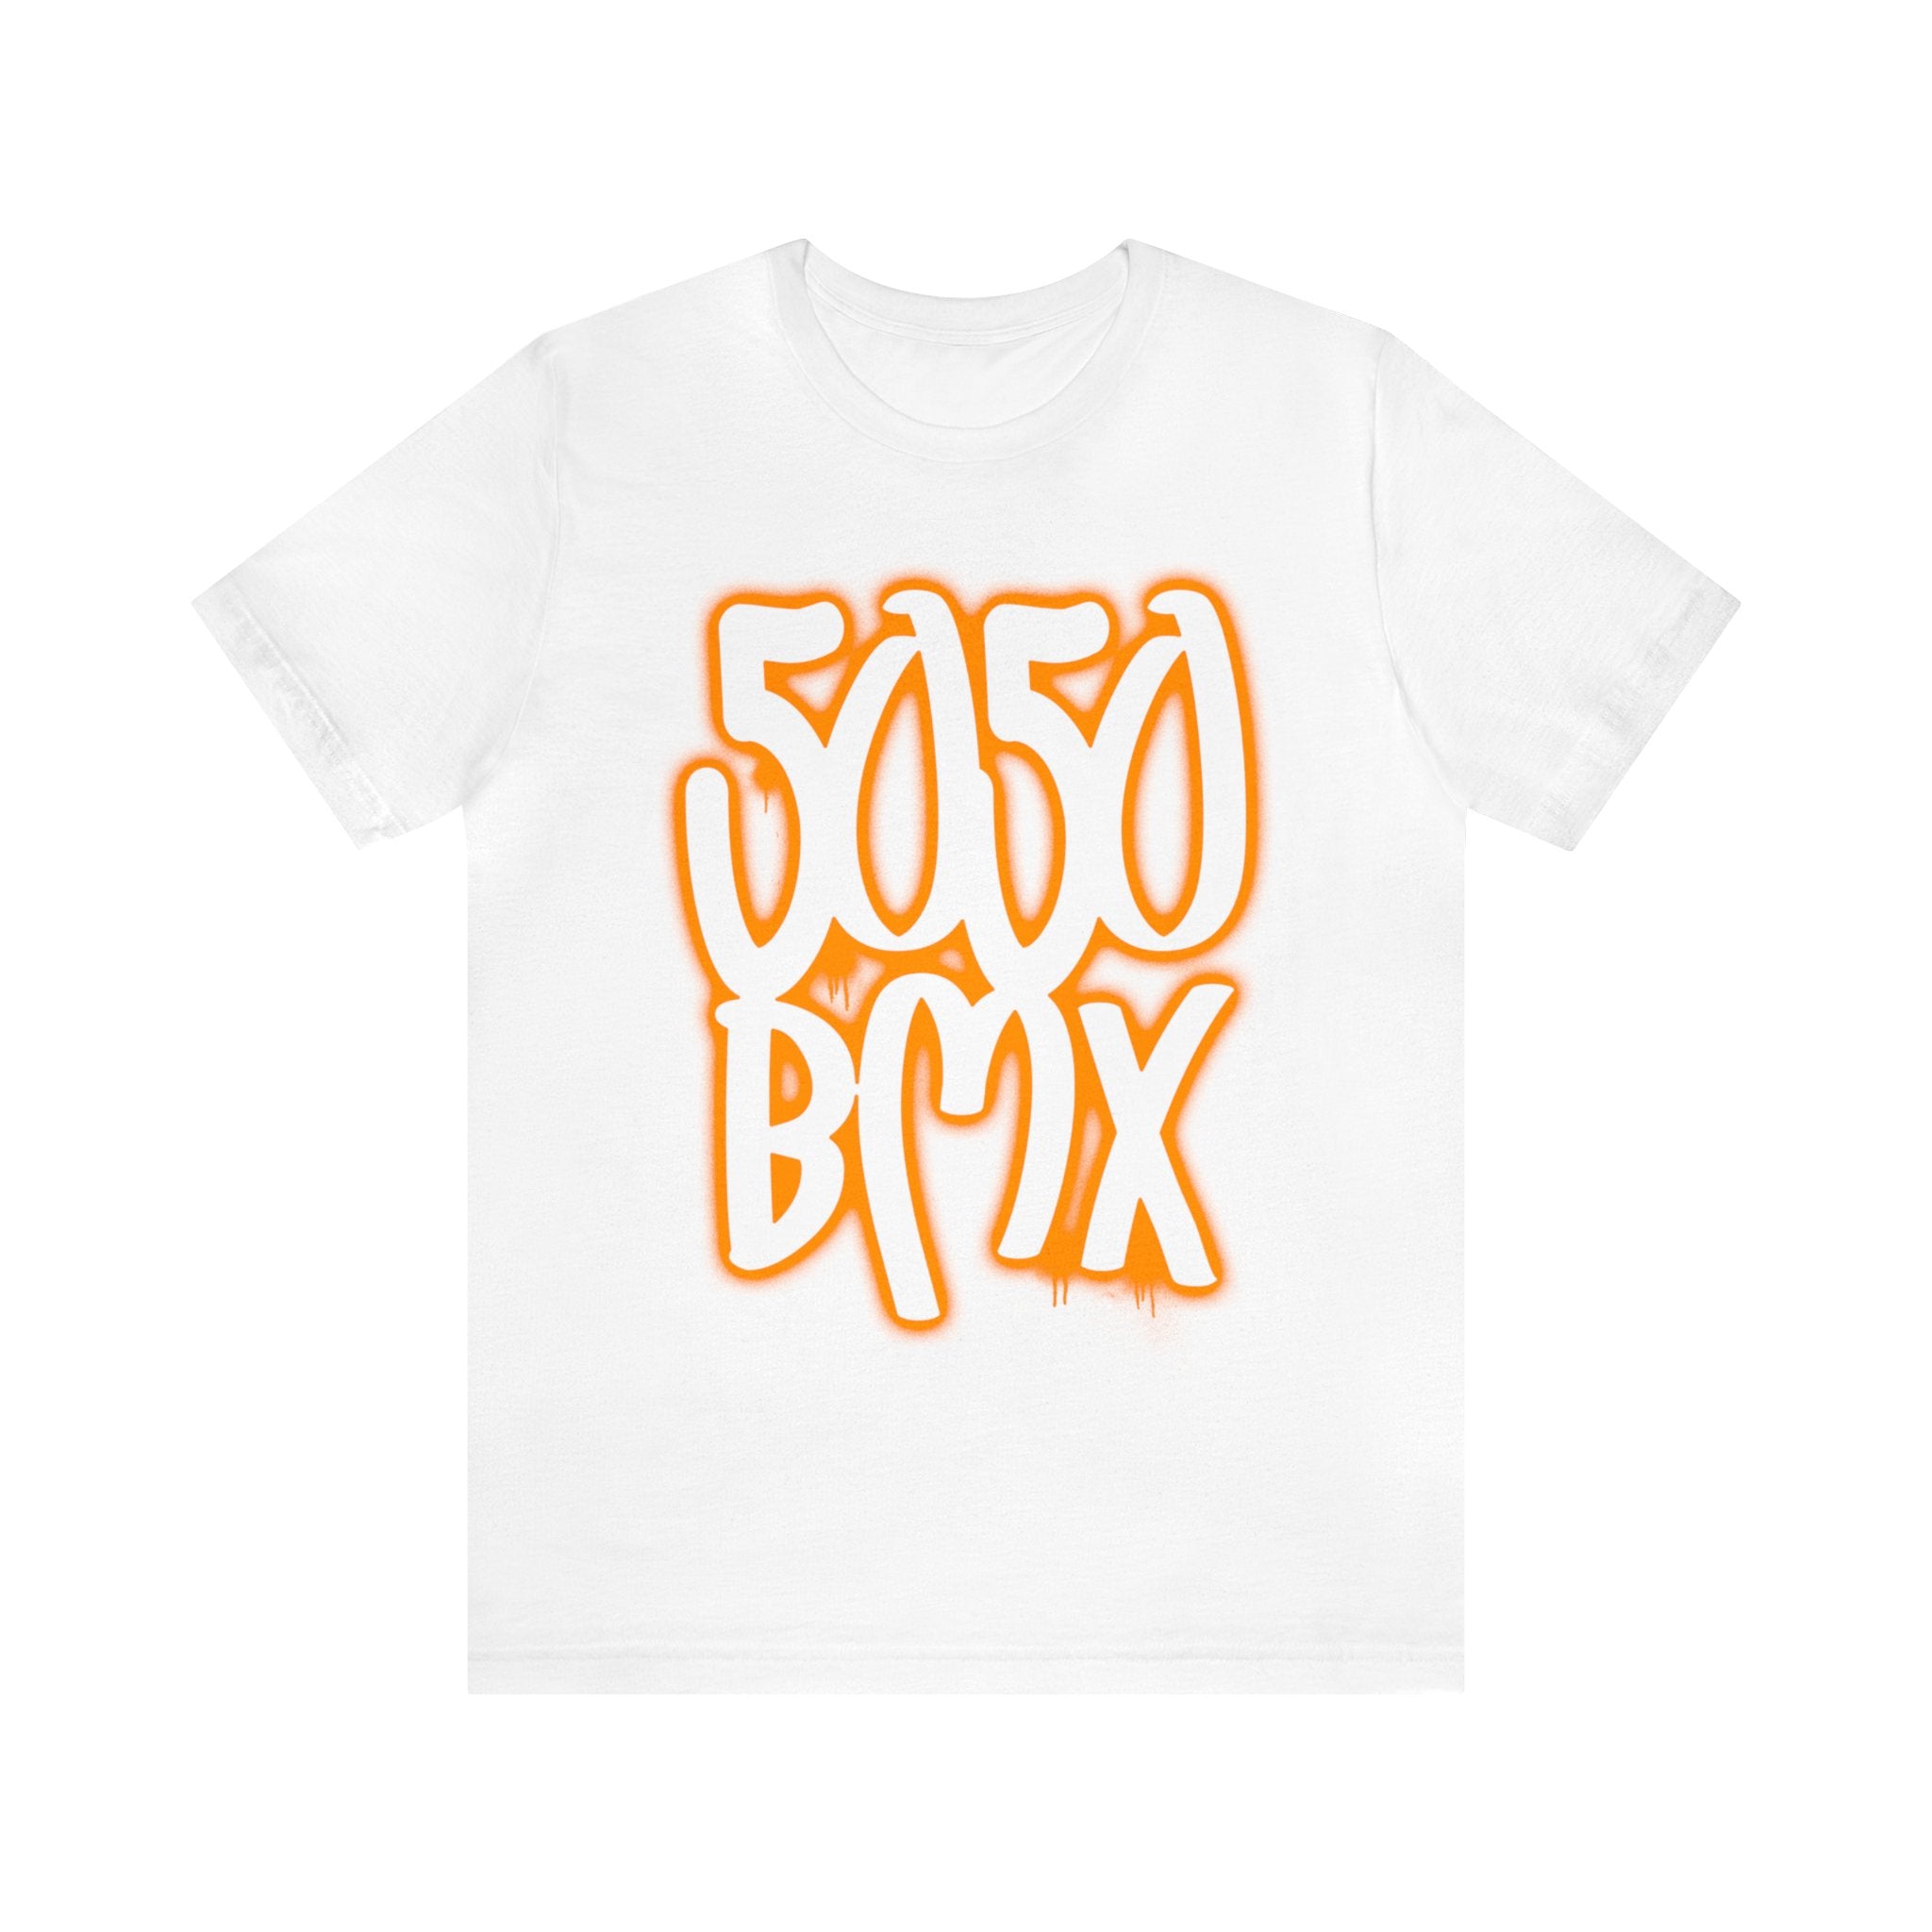 5050bmx Graffiti (Orange) - Short Sleeve Tee